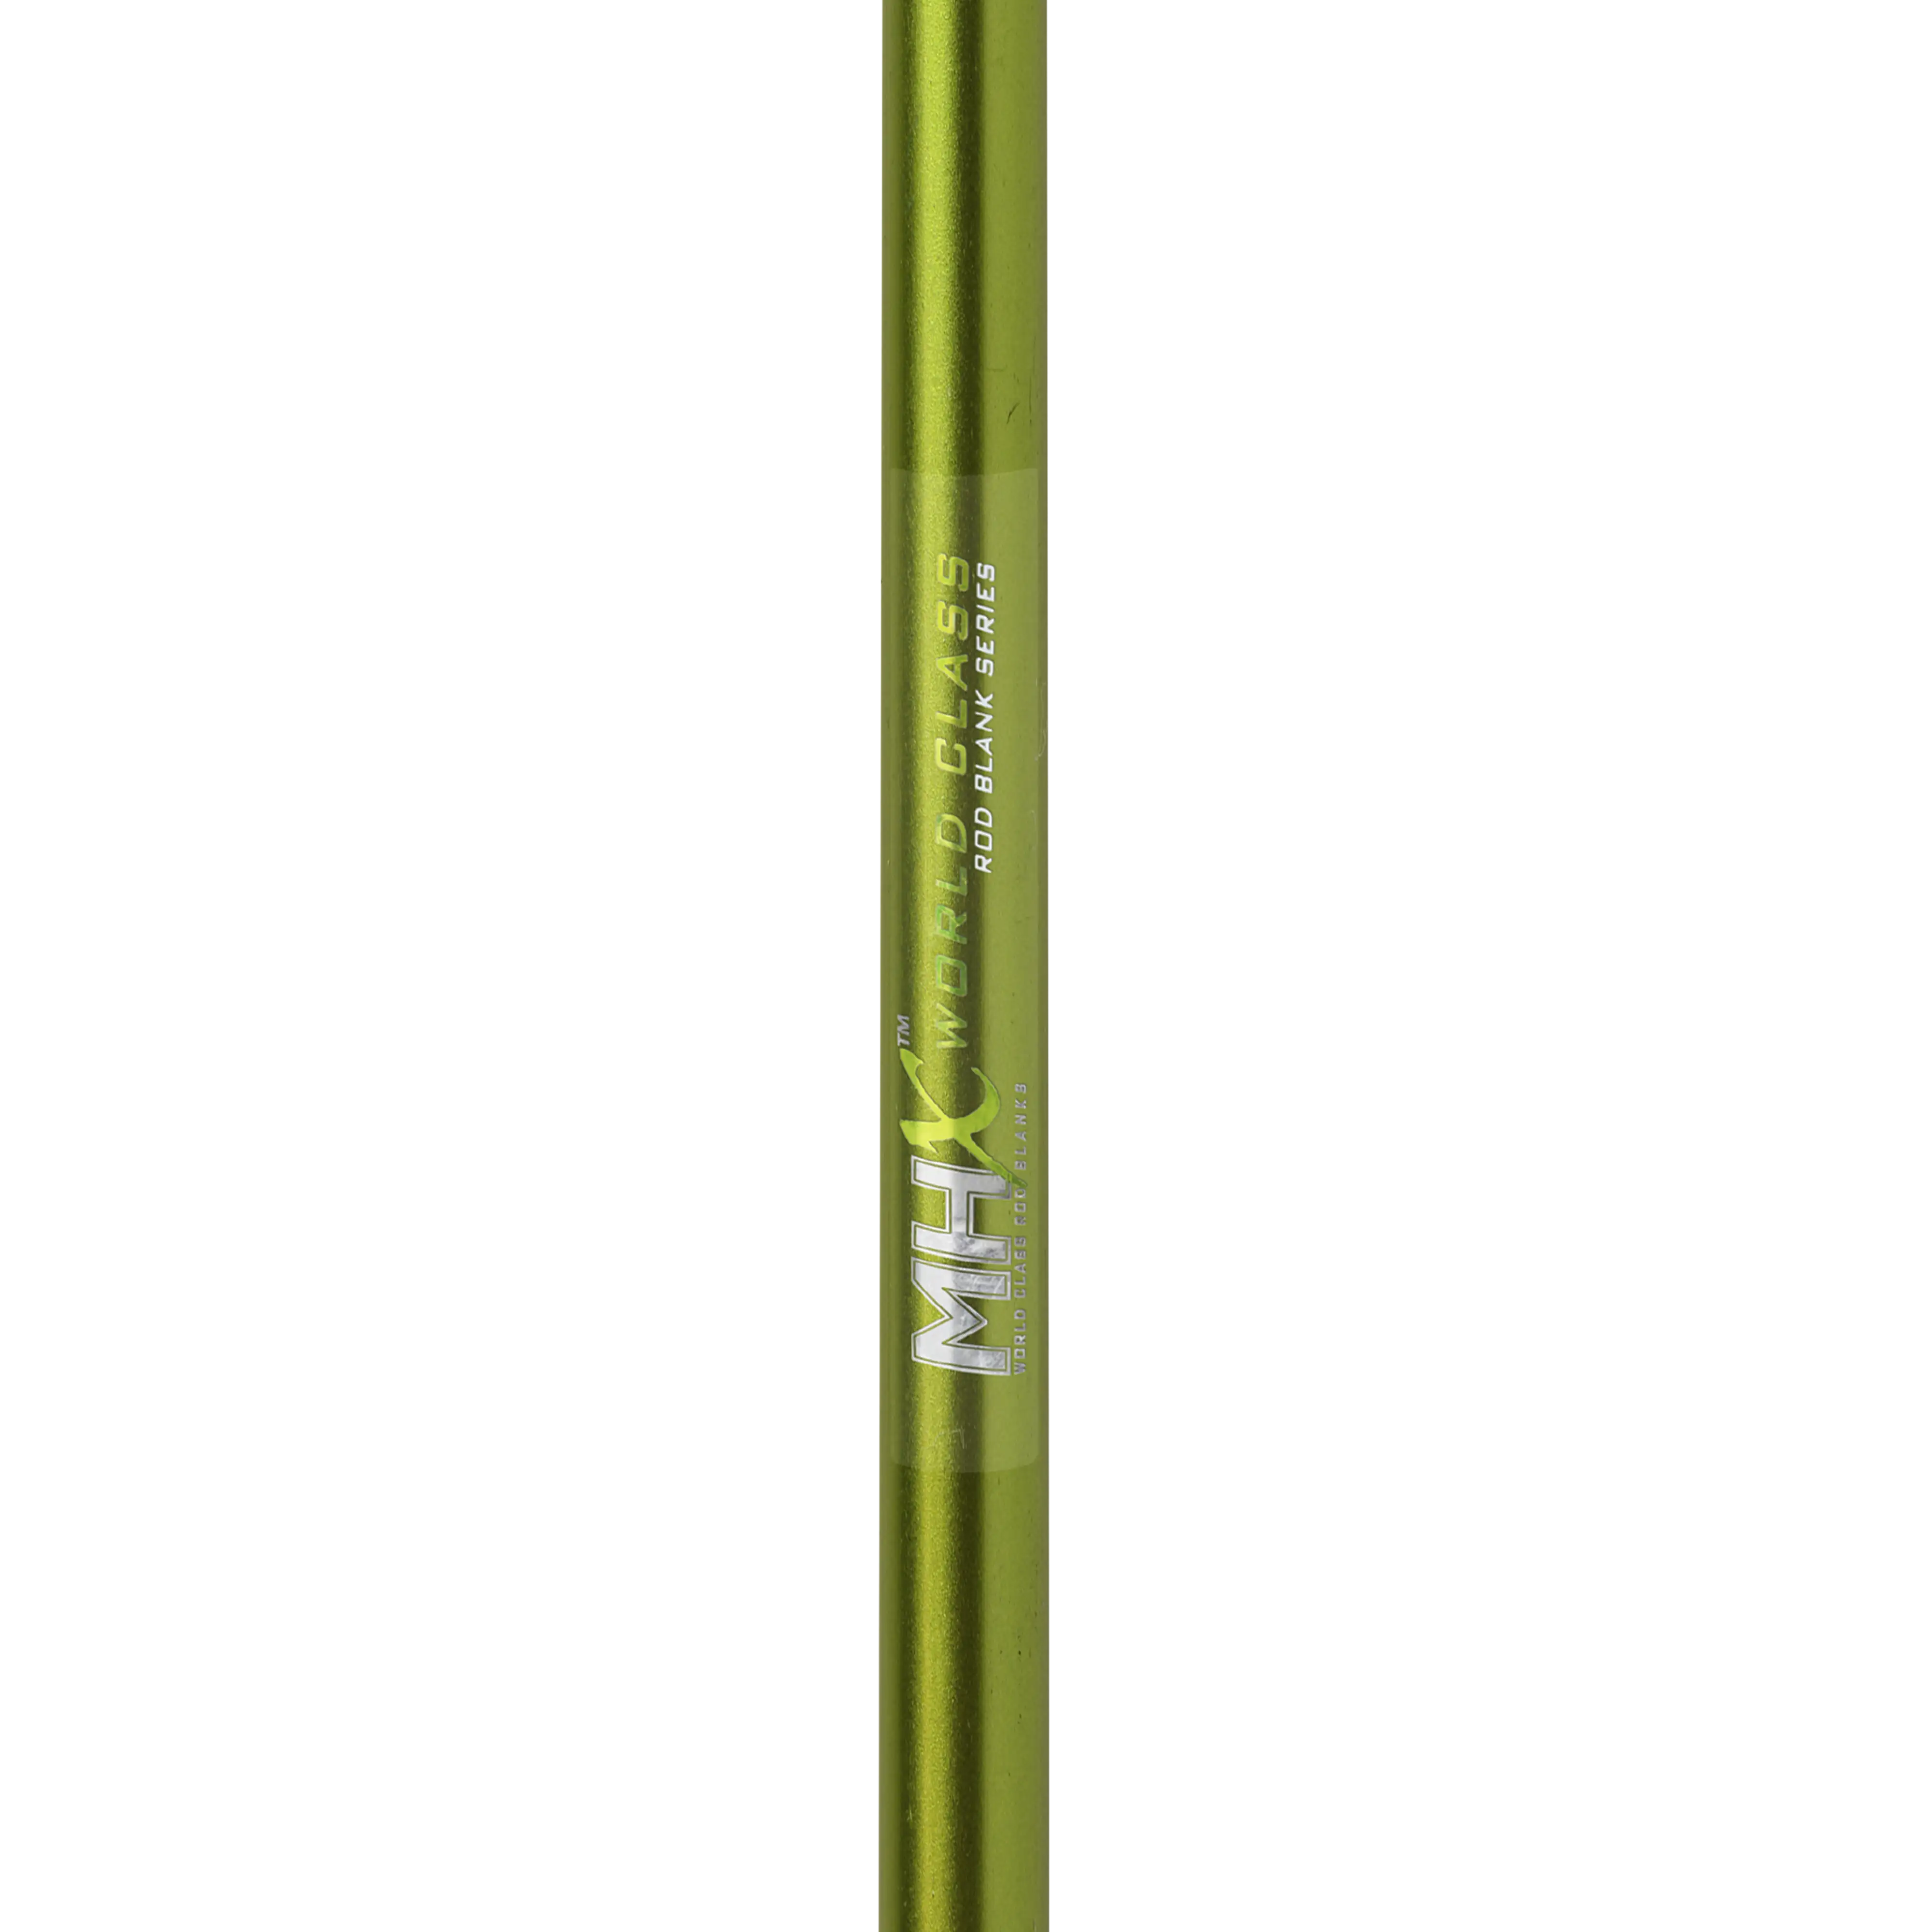  MHX 7'6 Medium Popping Rod Blank - P903-MHX : Sports &  Outdoors